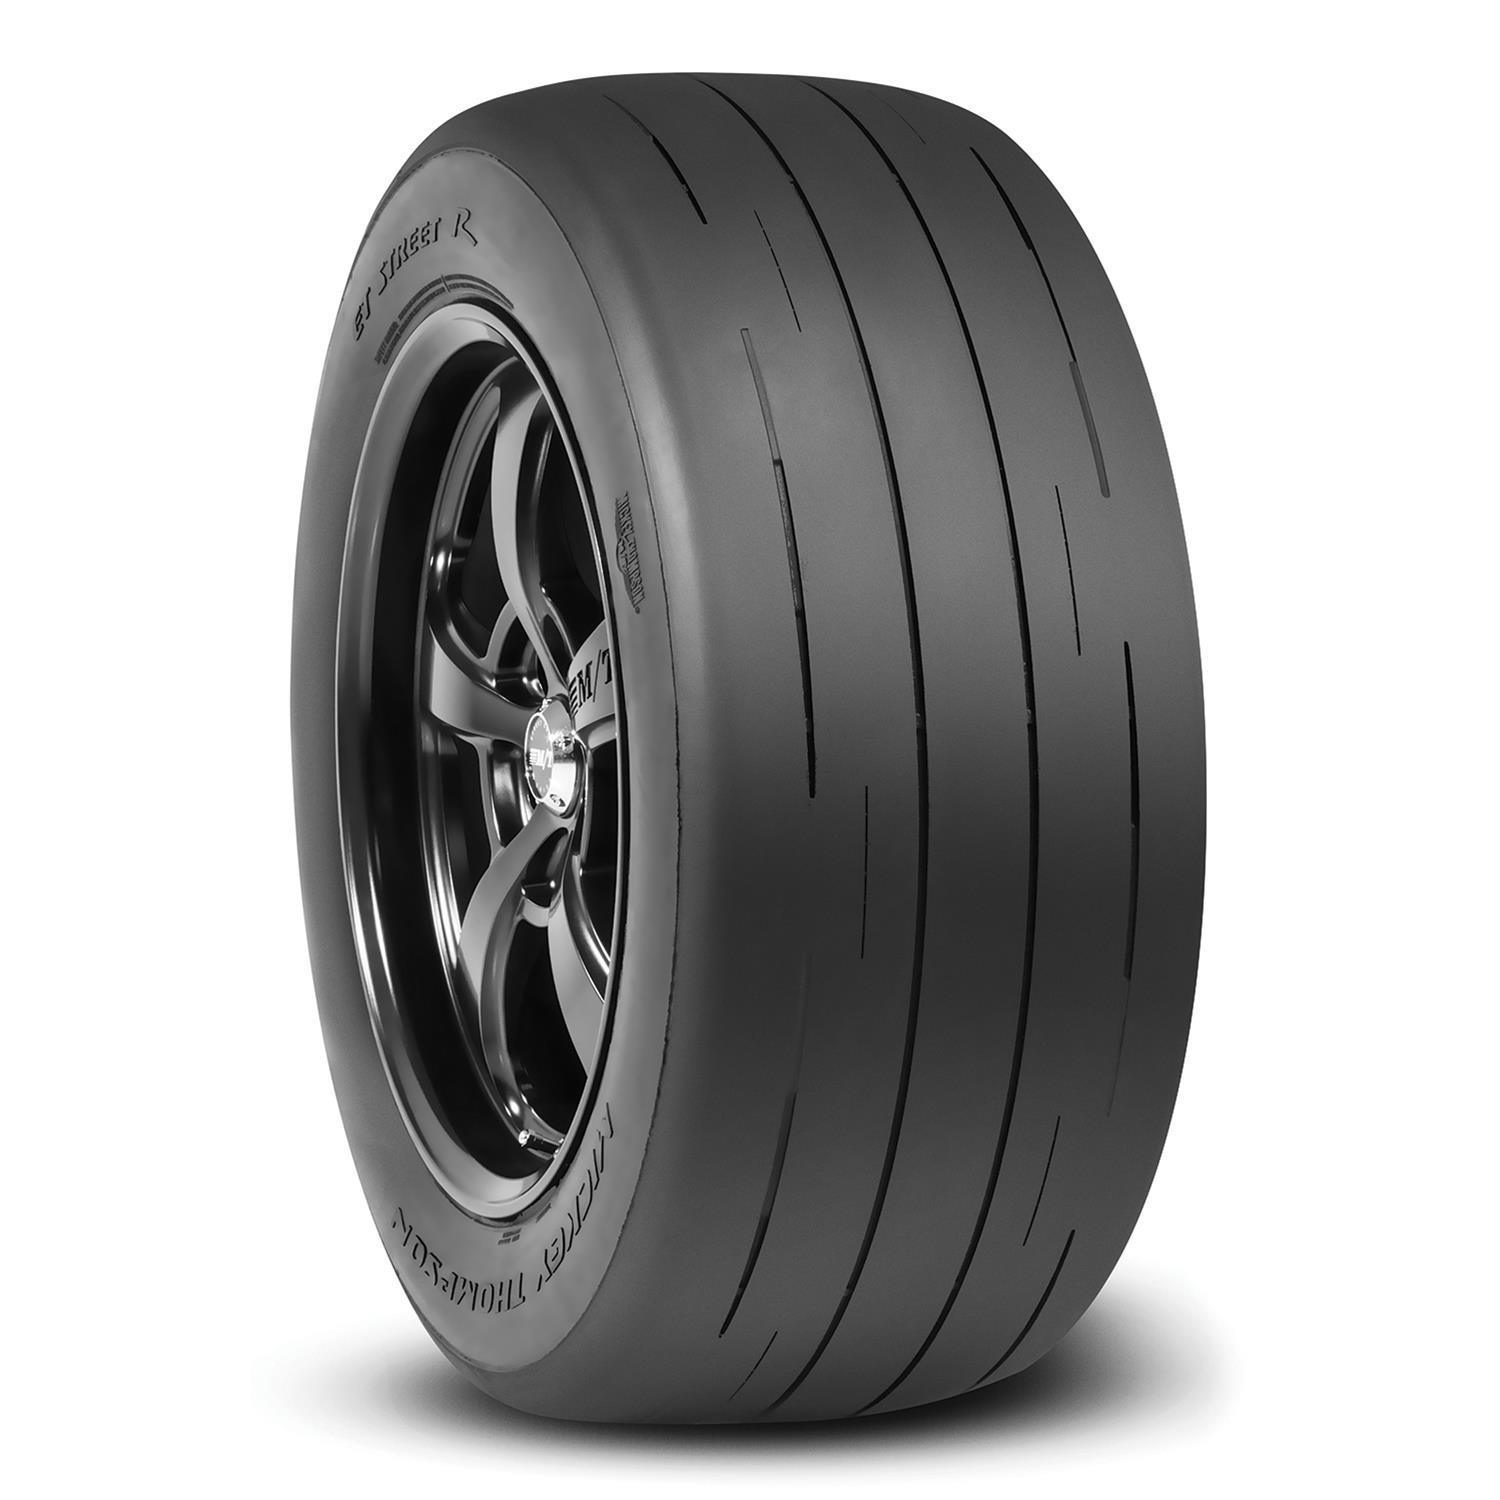 P225/50R15 ET Street R Tire - Burlile Performance Products